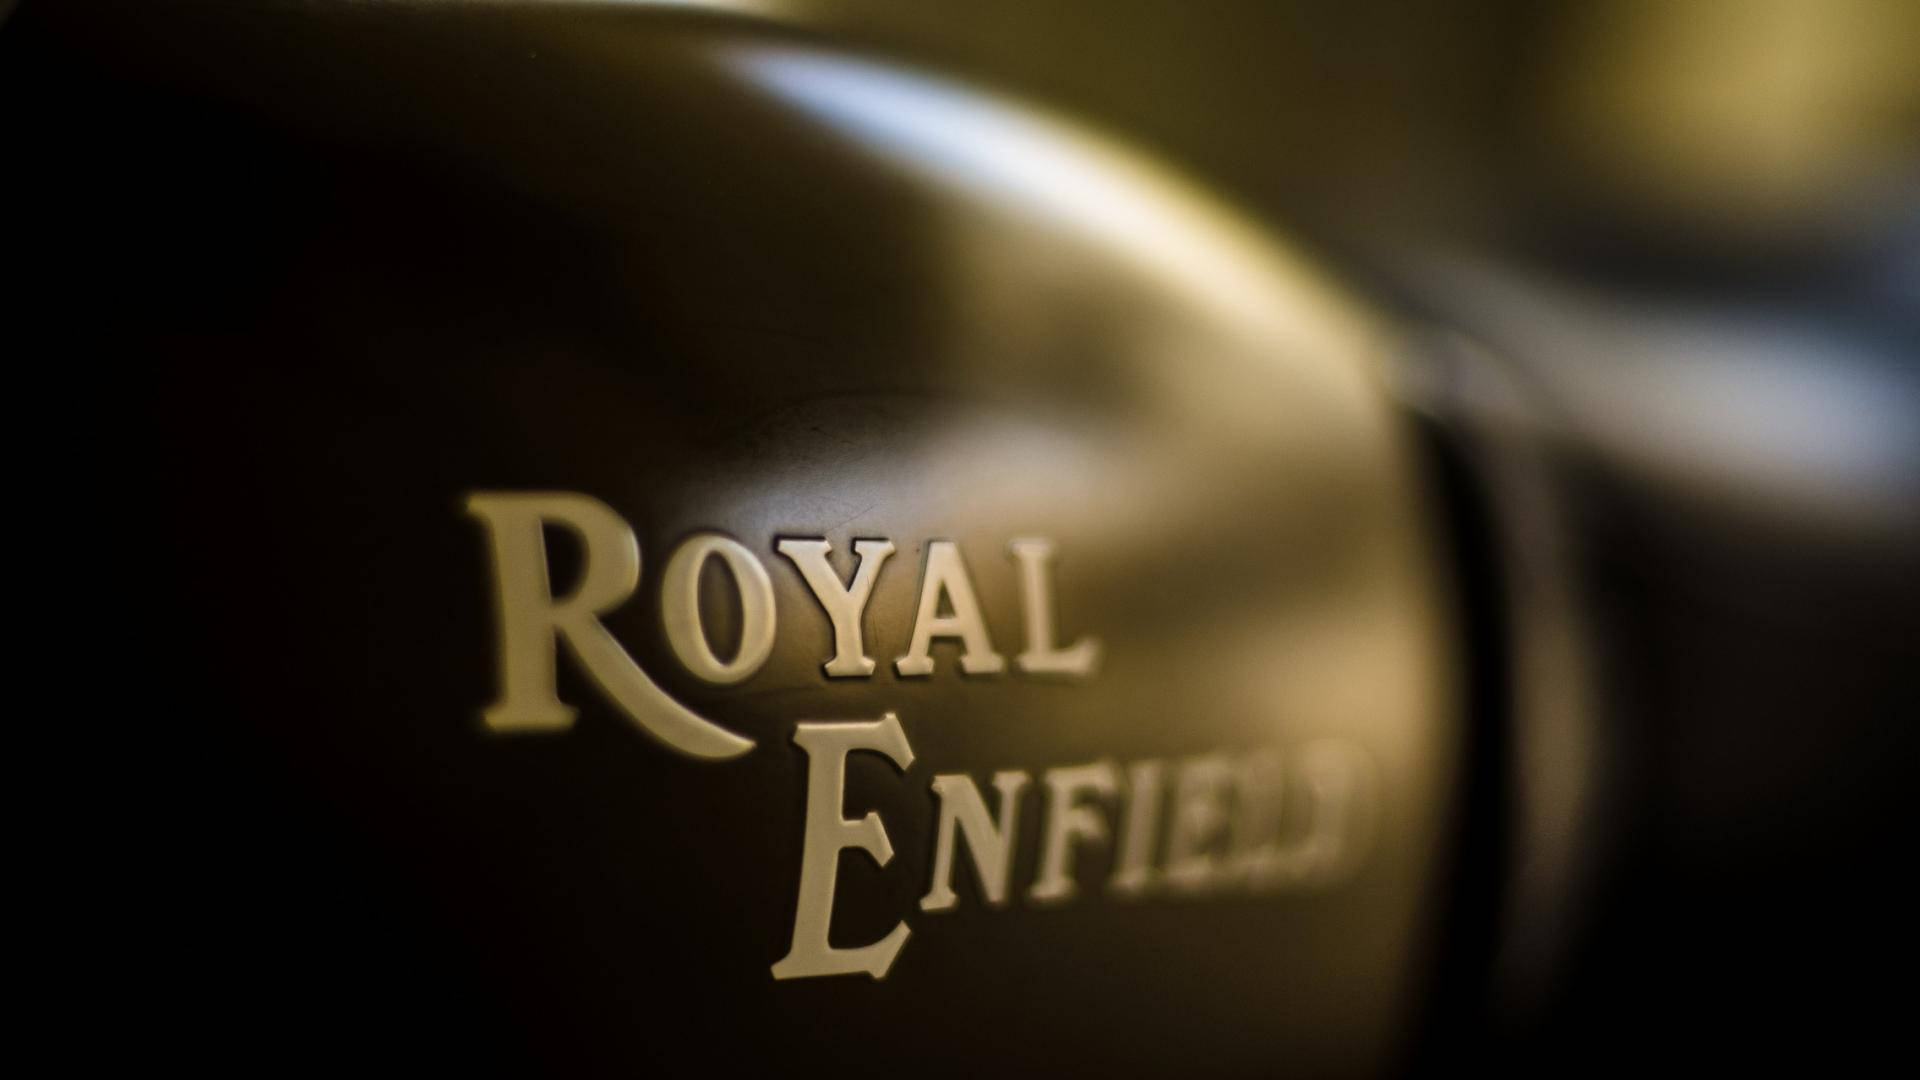 Royal Enfield Hd Brand Name Closeup Background